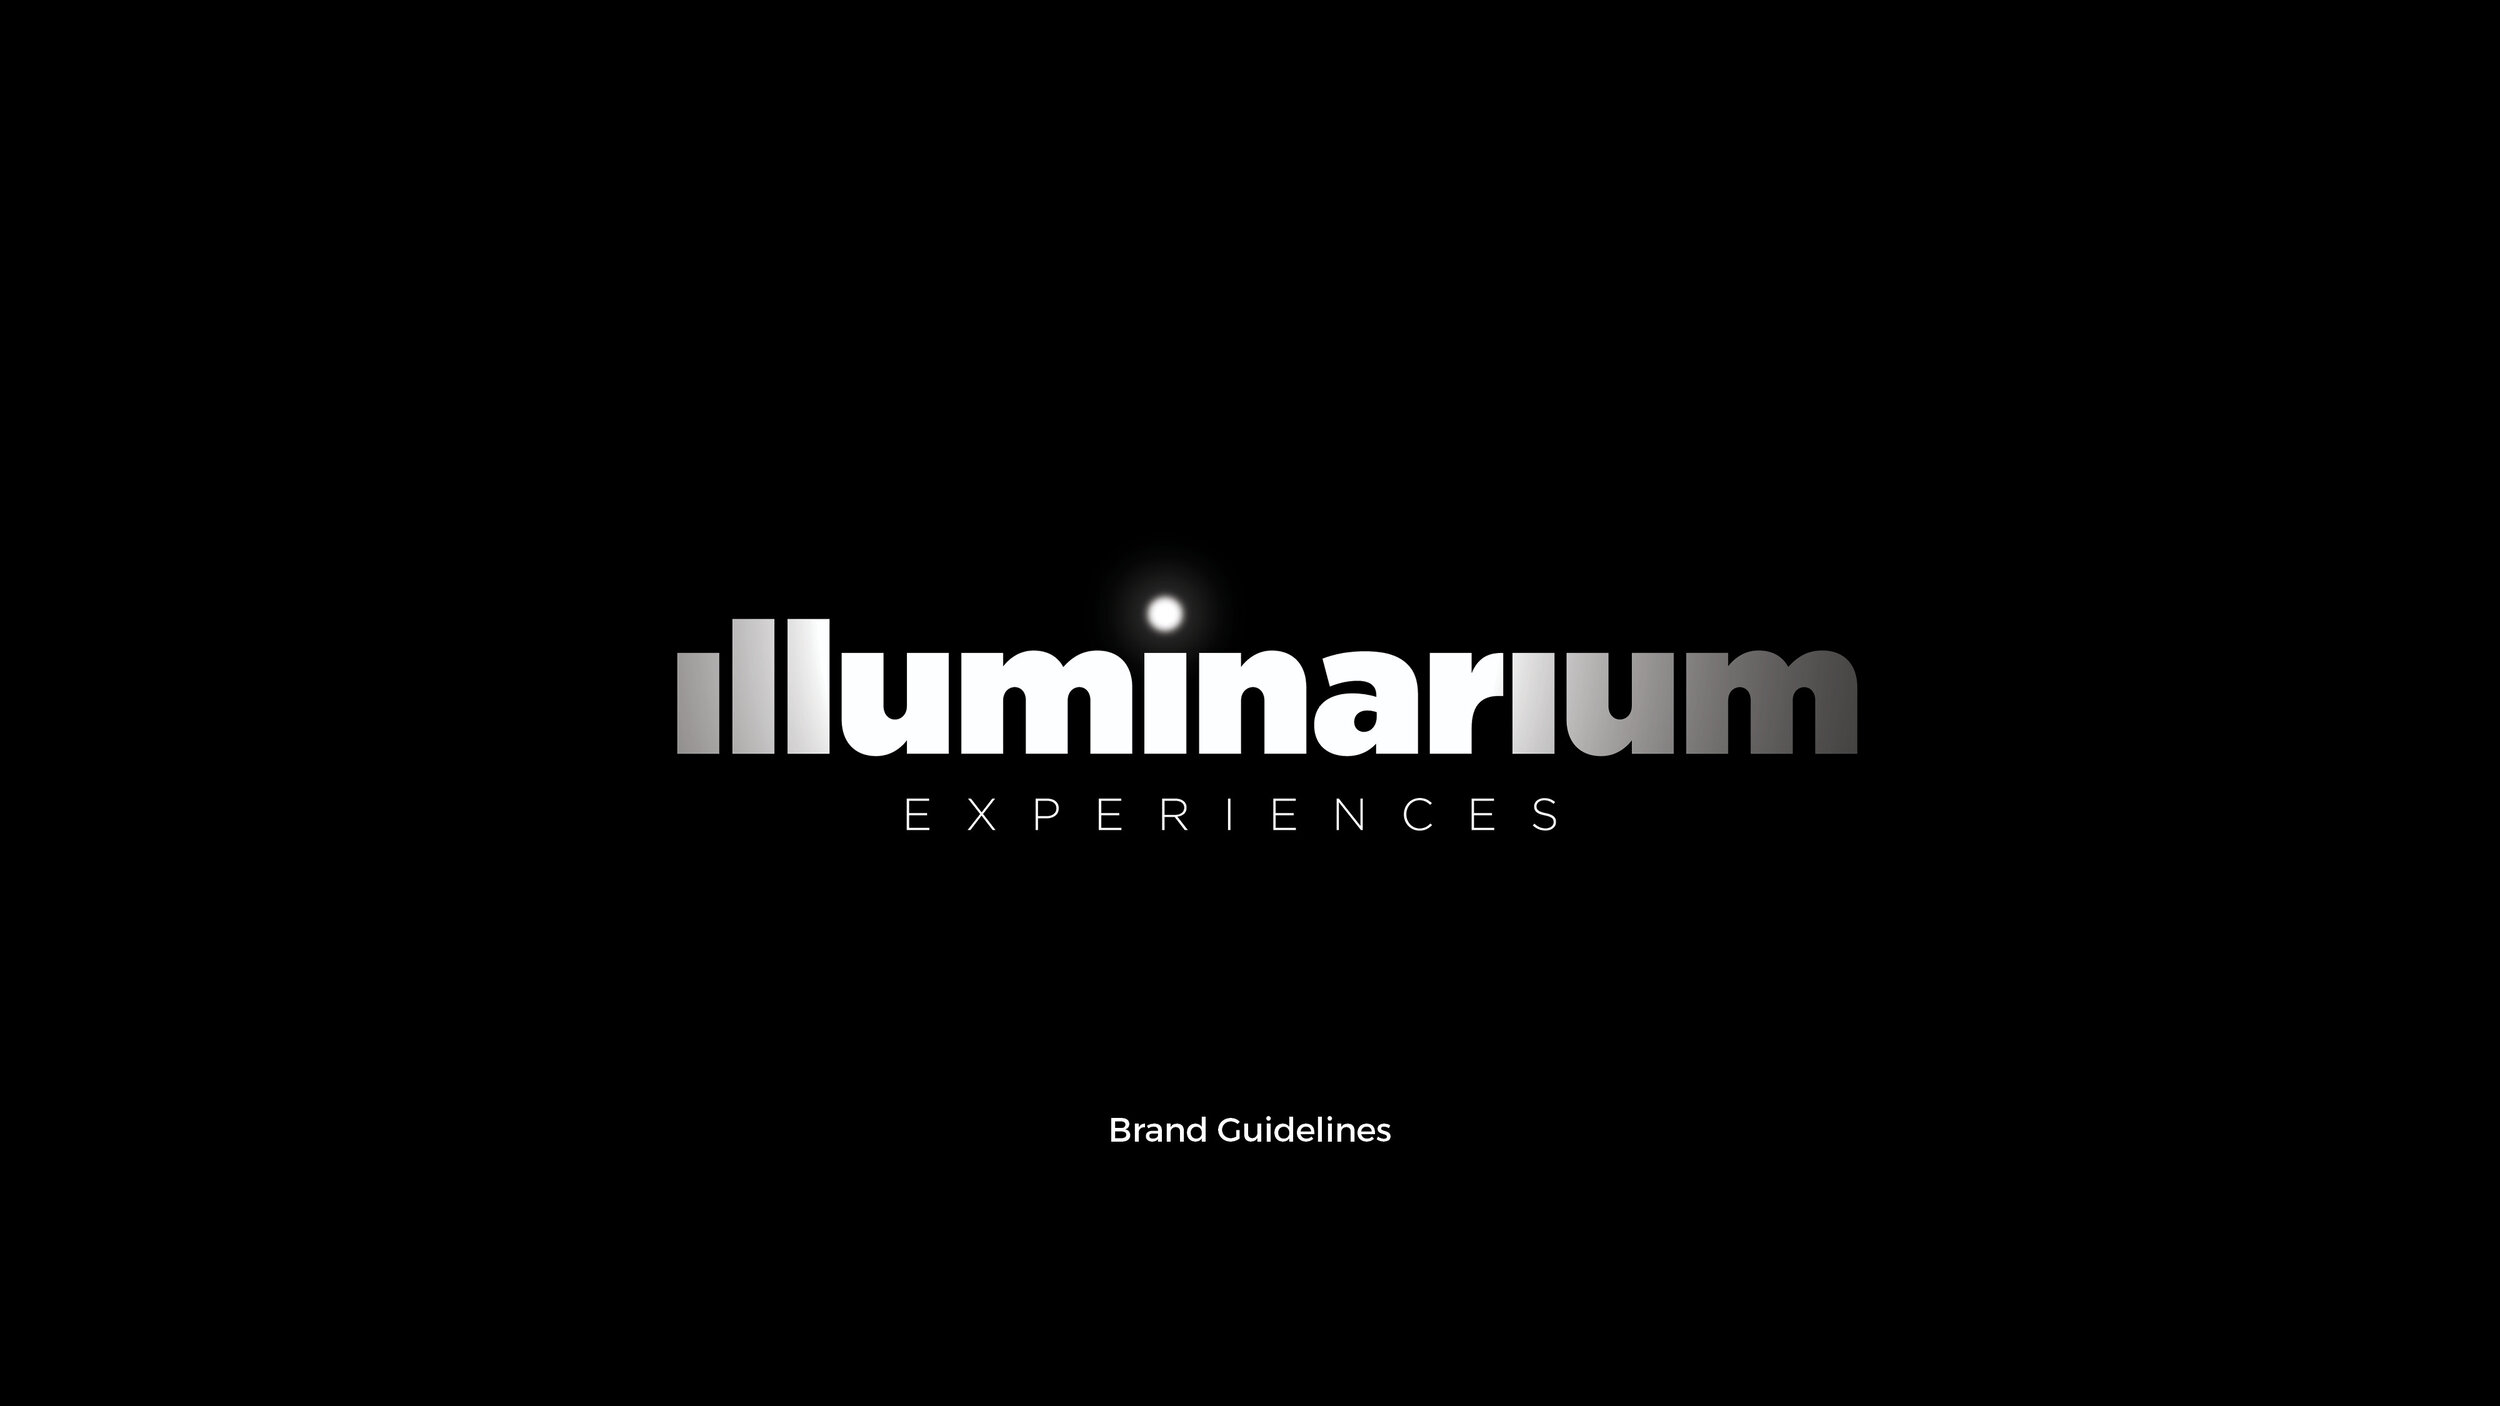 illuminarium_brand guide_16:9_May2020GD_final.jpg